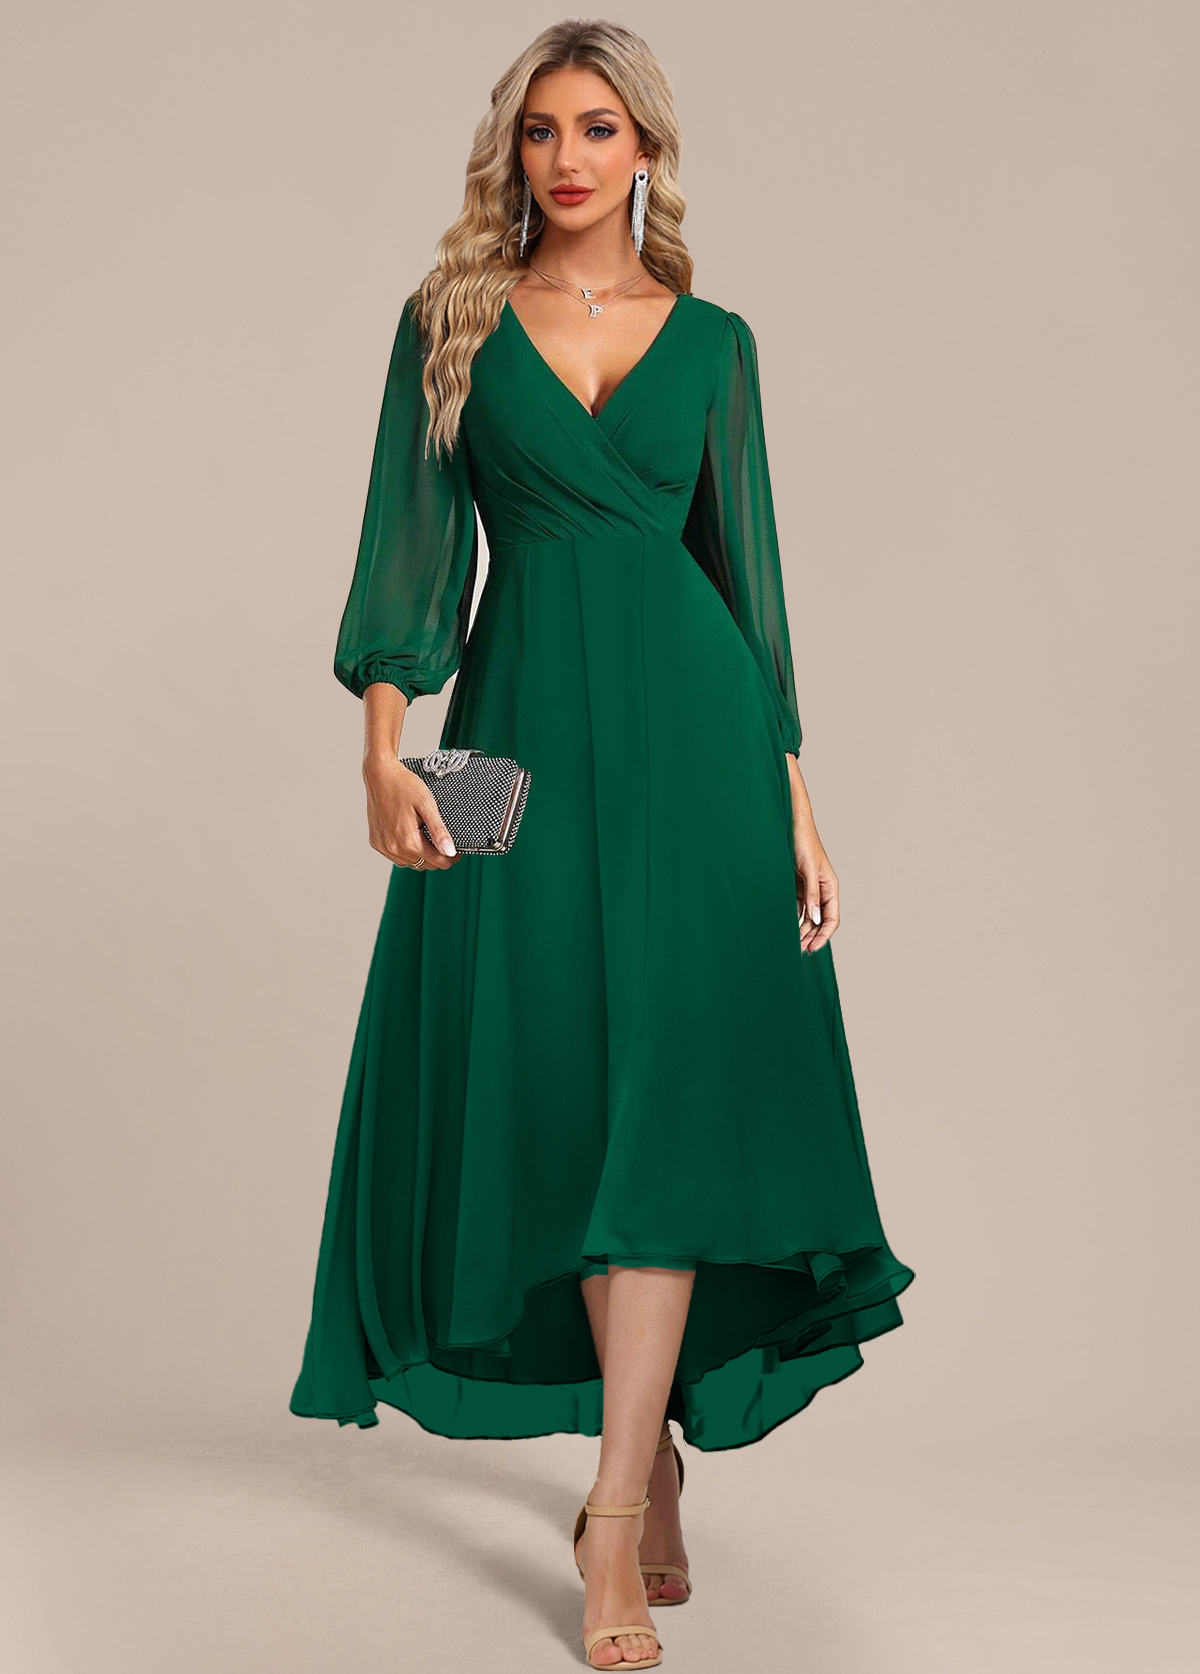 Green Surplice High Low Three Quarter Length Sleeve Dress